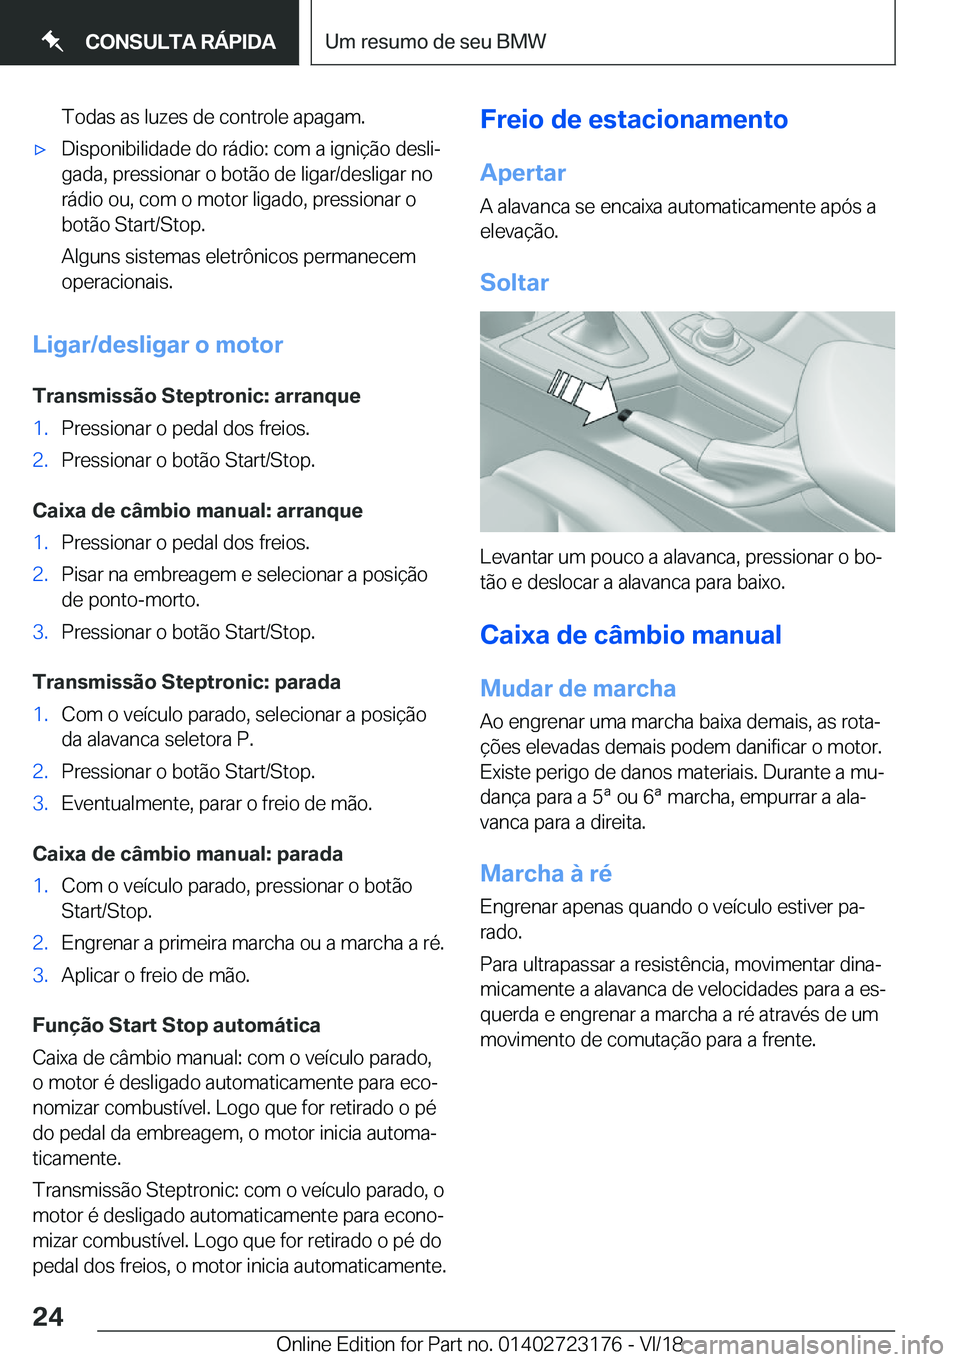 BMW 4 SERIES GRAN COUPE 2019  Manual do condutor (in Portuguese) �T�o�d�a�s��a�s��l�u�z�e�s��d�e��c�o�n�t�r�o�l�e��a�p�a�g�a�m�.x�D�i�s�p�o�n�i�b�i�l�i�d�a�d�e��d�o��r�á�d�i�o�:��c�o�m��a��i�g�n�i�